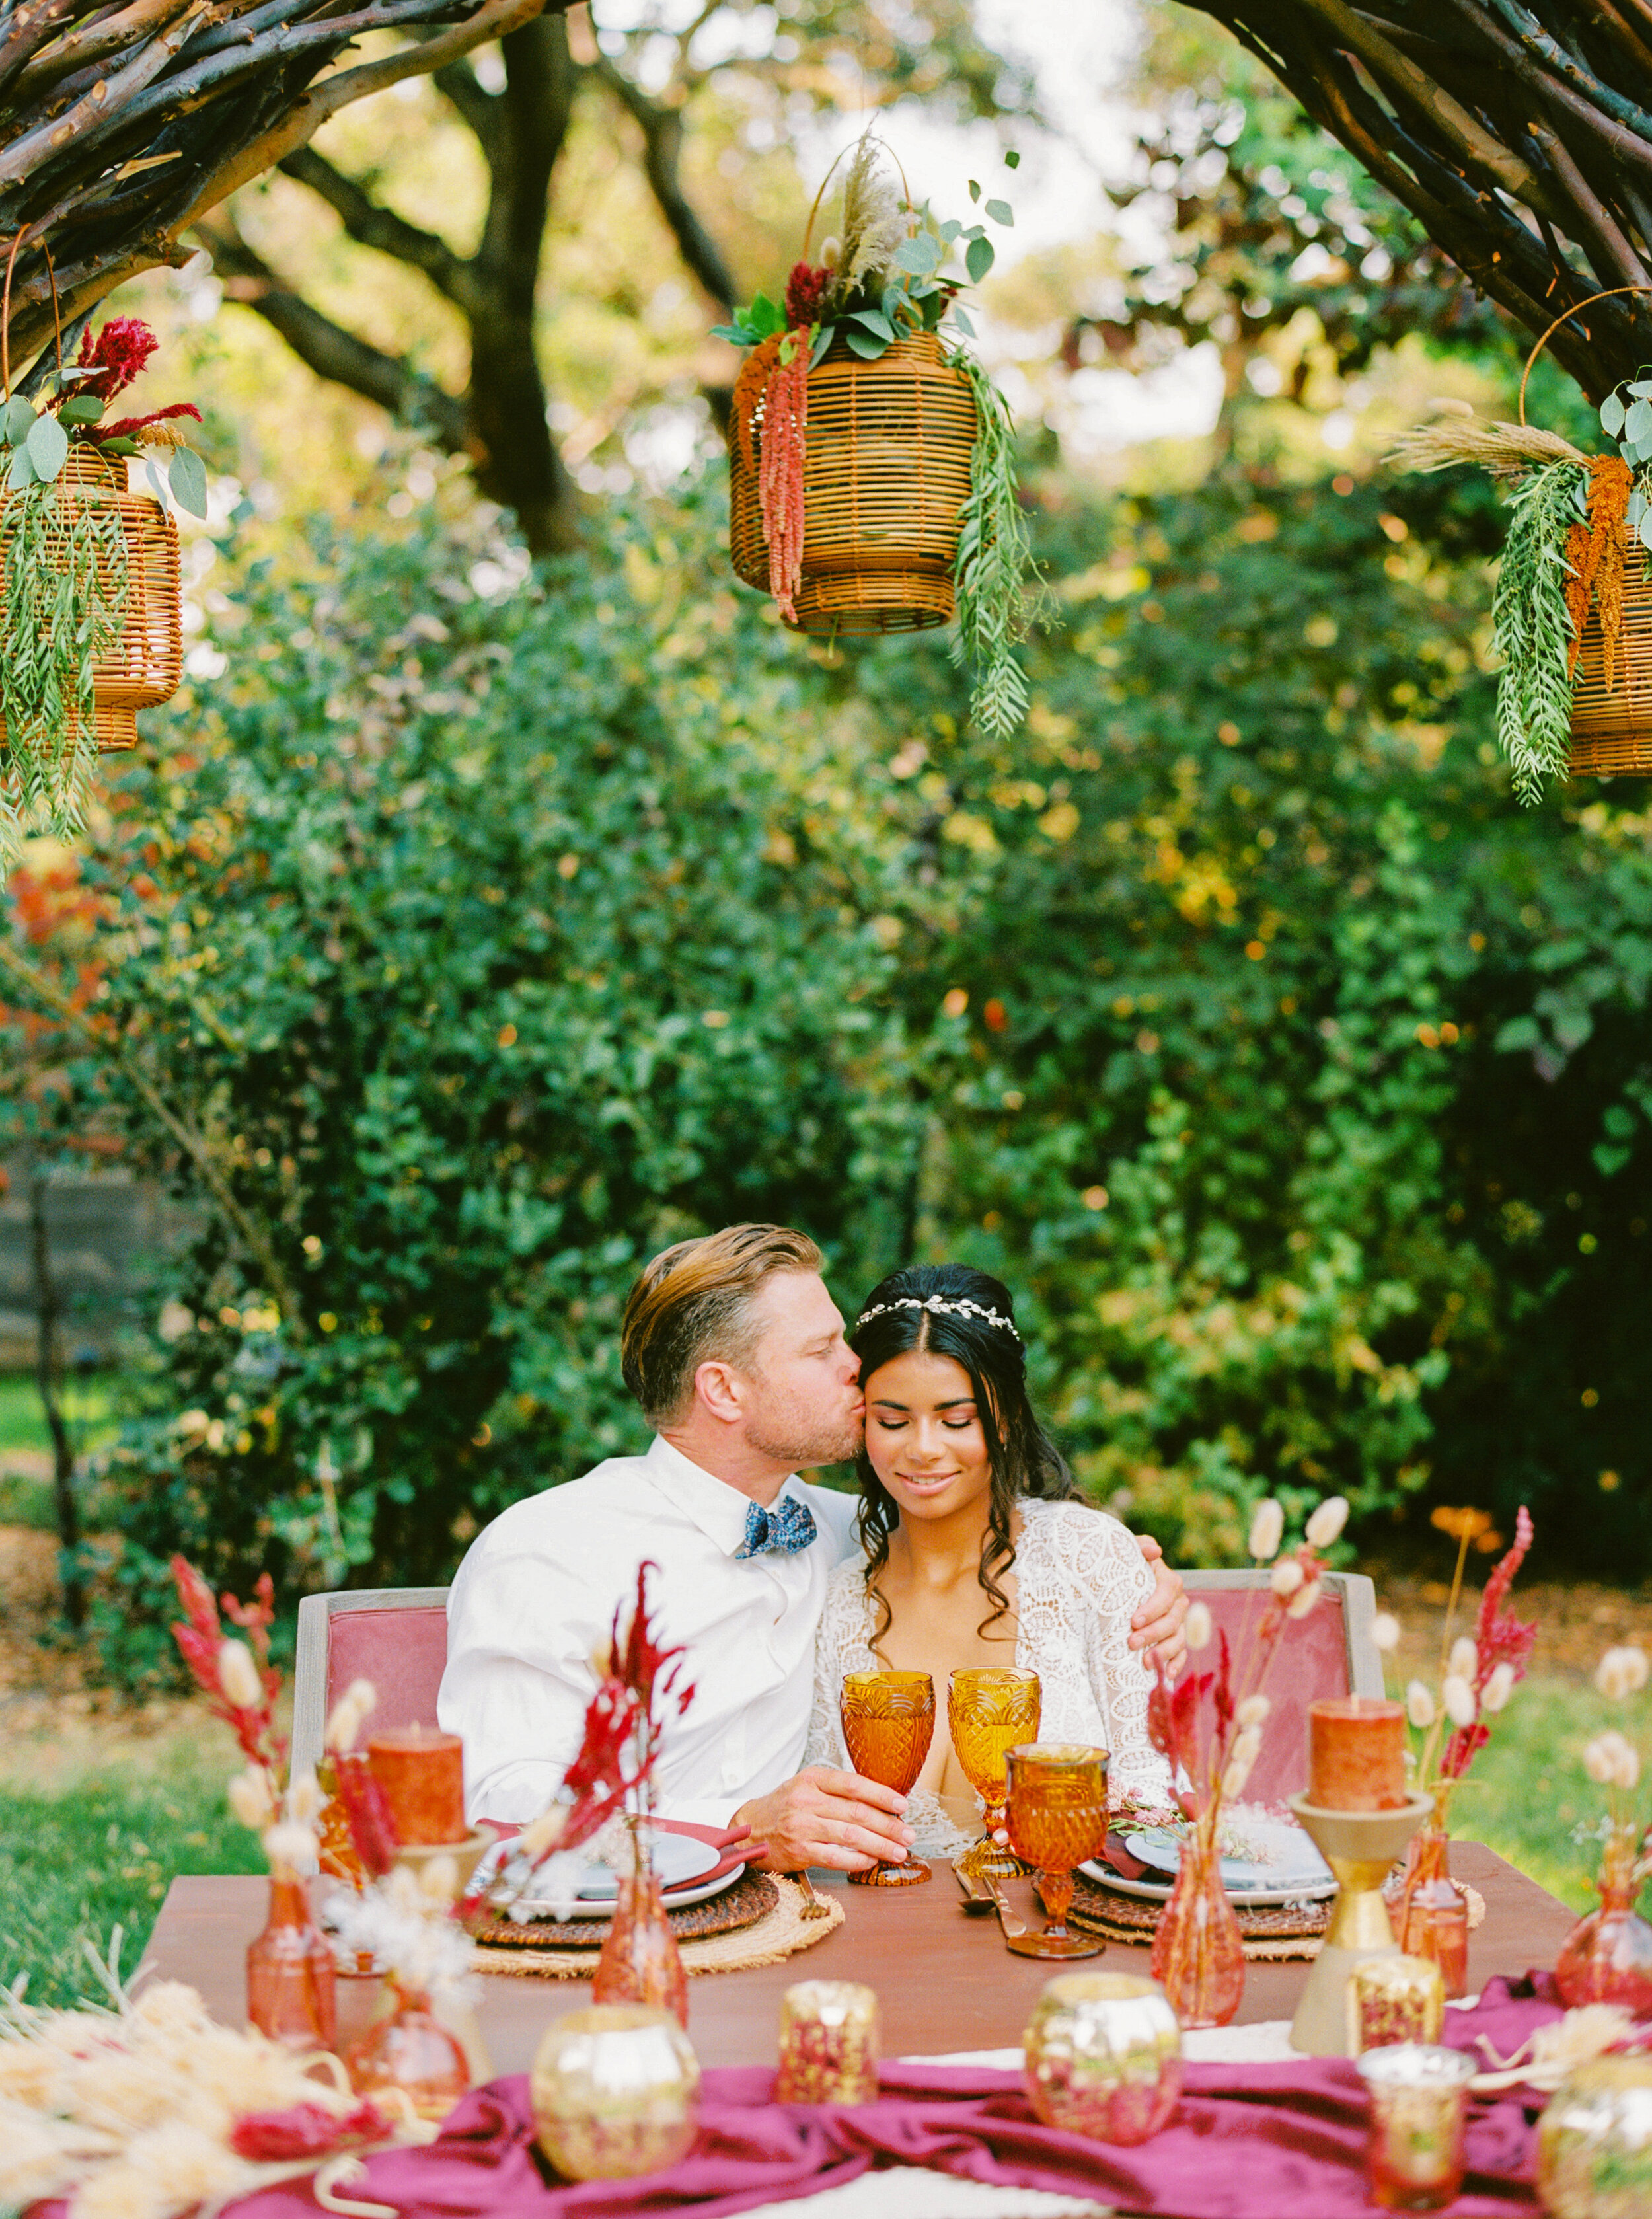 Sarahi Hadden - An Earthy Summer Boho Inspired Wedding with Sunset Hues at Gardener Ranch-83.jpg